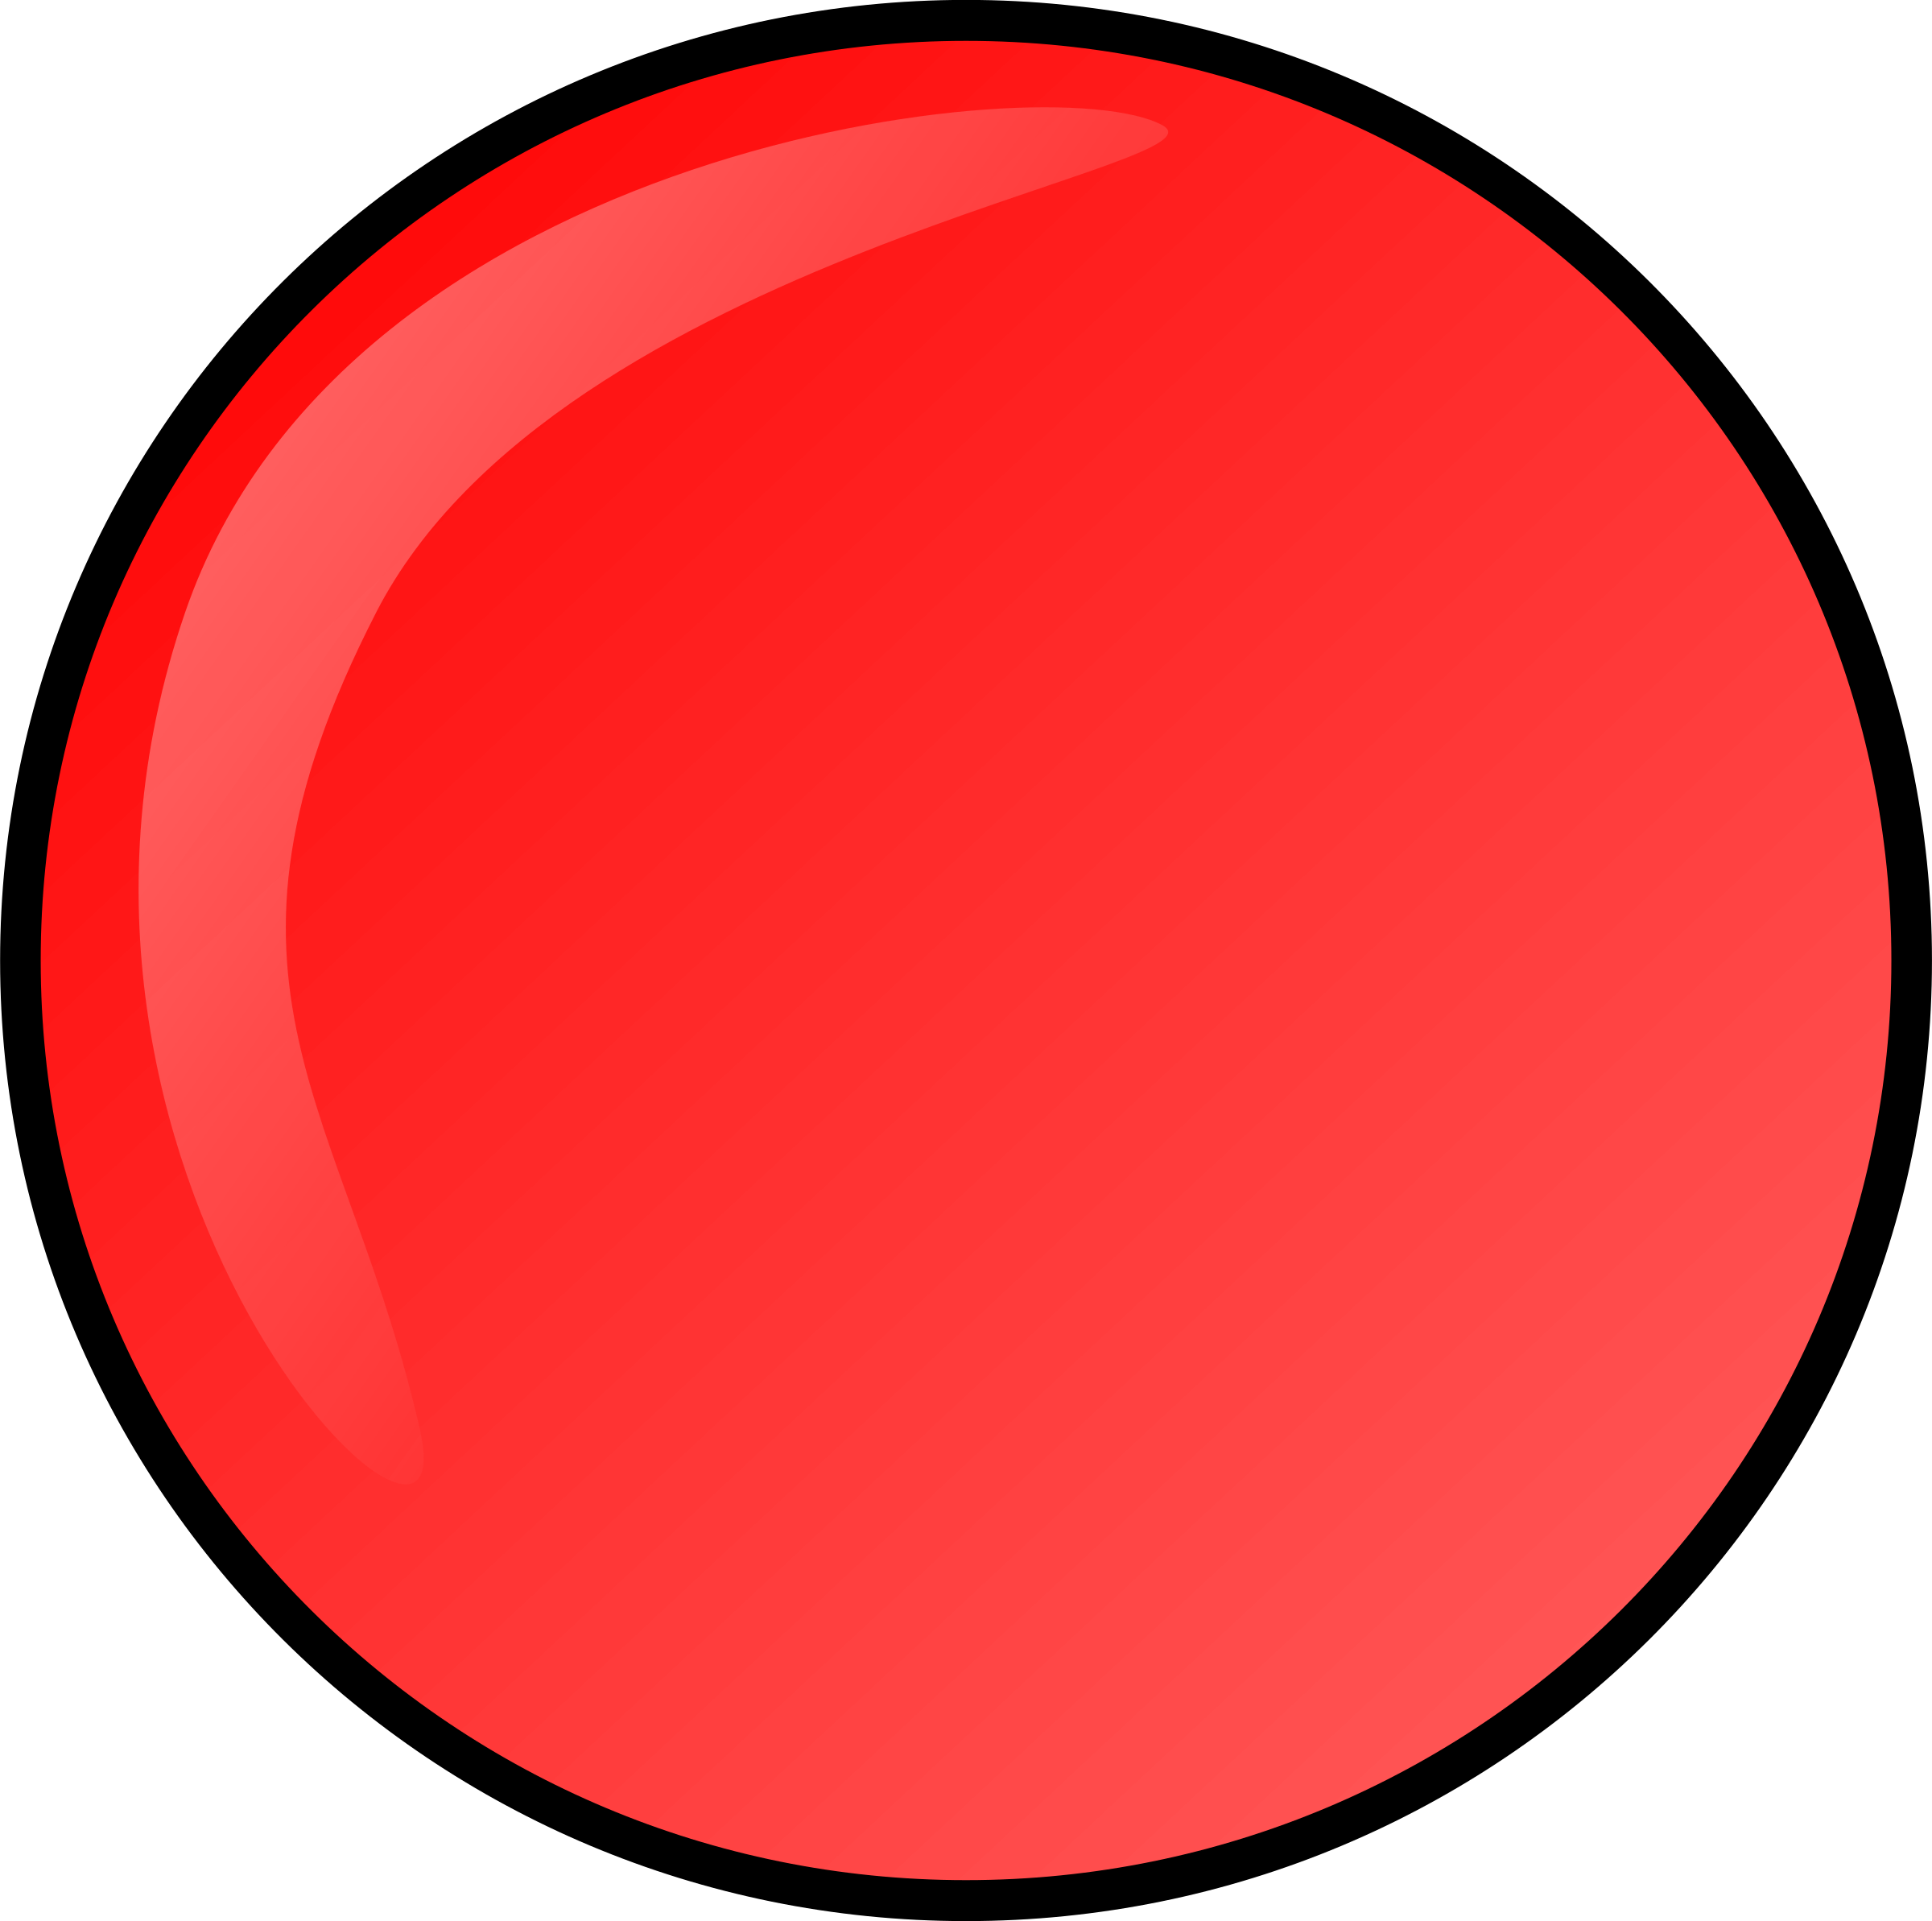 Круг картинка. Красный круг. Круг красного цвета. Красный кружок. Красные кружочки.